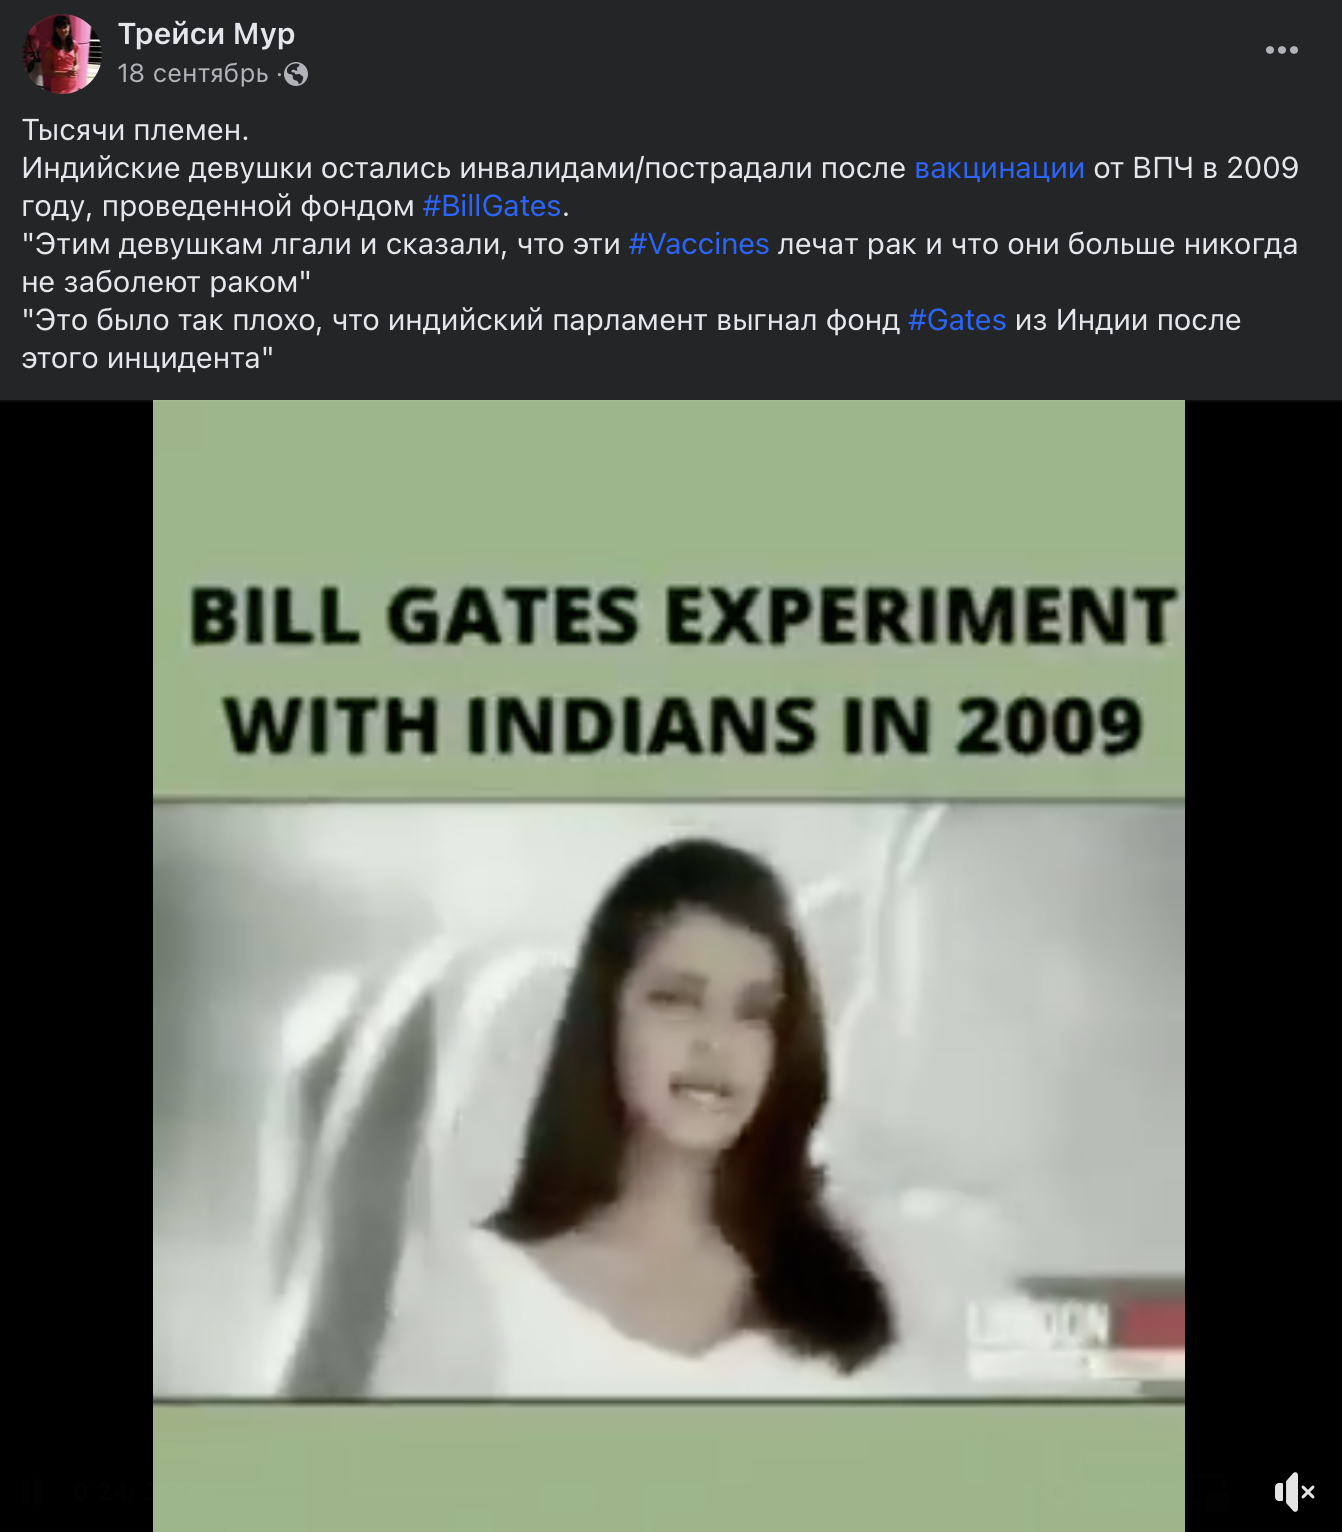 Фонд Билла Гейтса изгнали из Индии из-за вакцин против ВПЧ в 2009